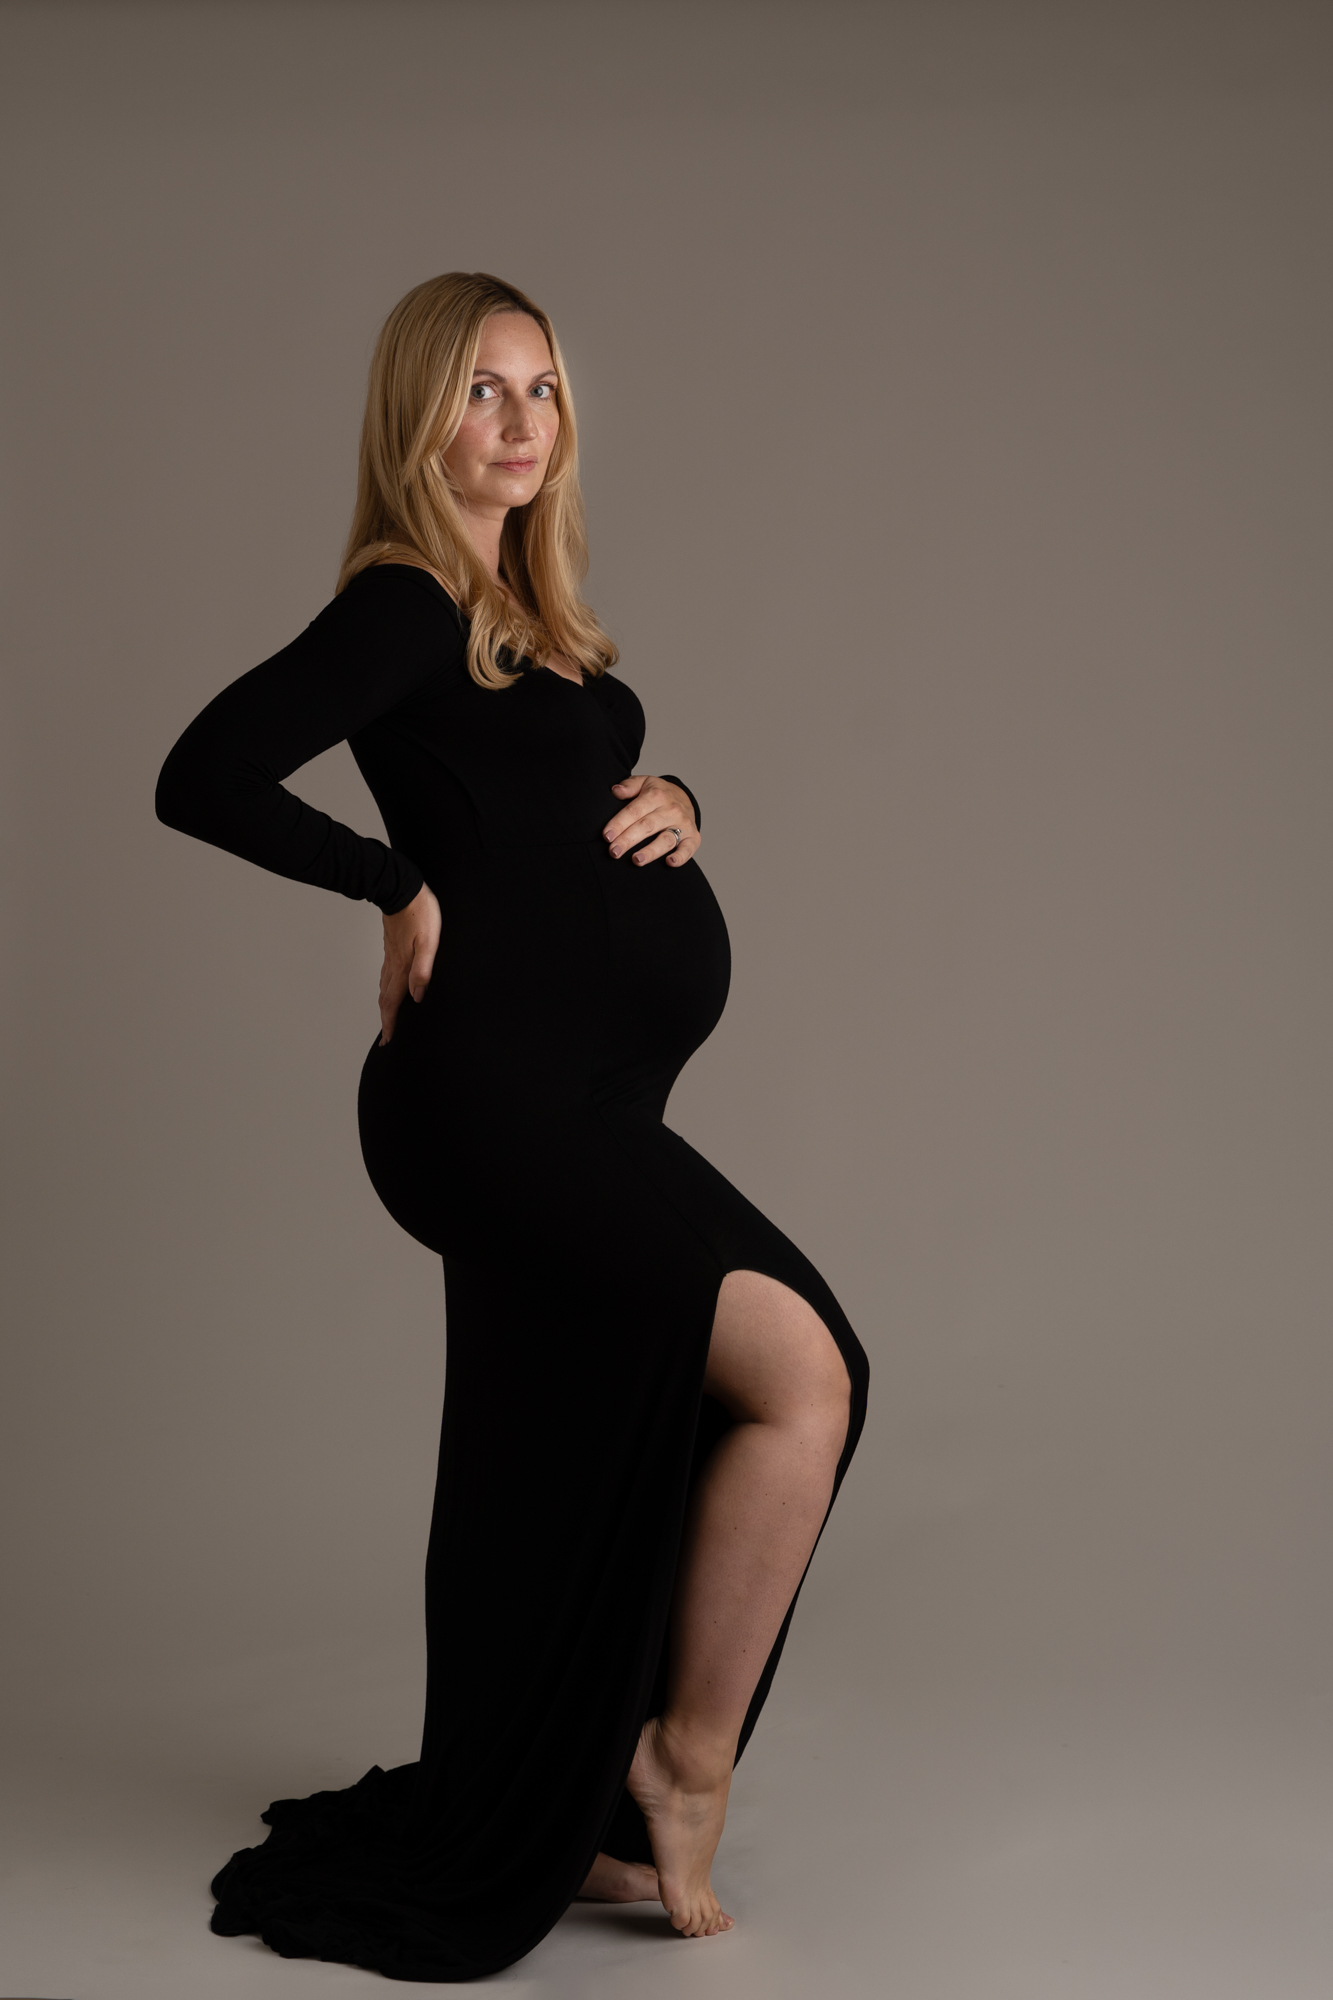 maternity photoshoot image of pregnant woman wearing a black dress by edinburgh maternity photographer beautiful bairns photography